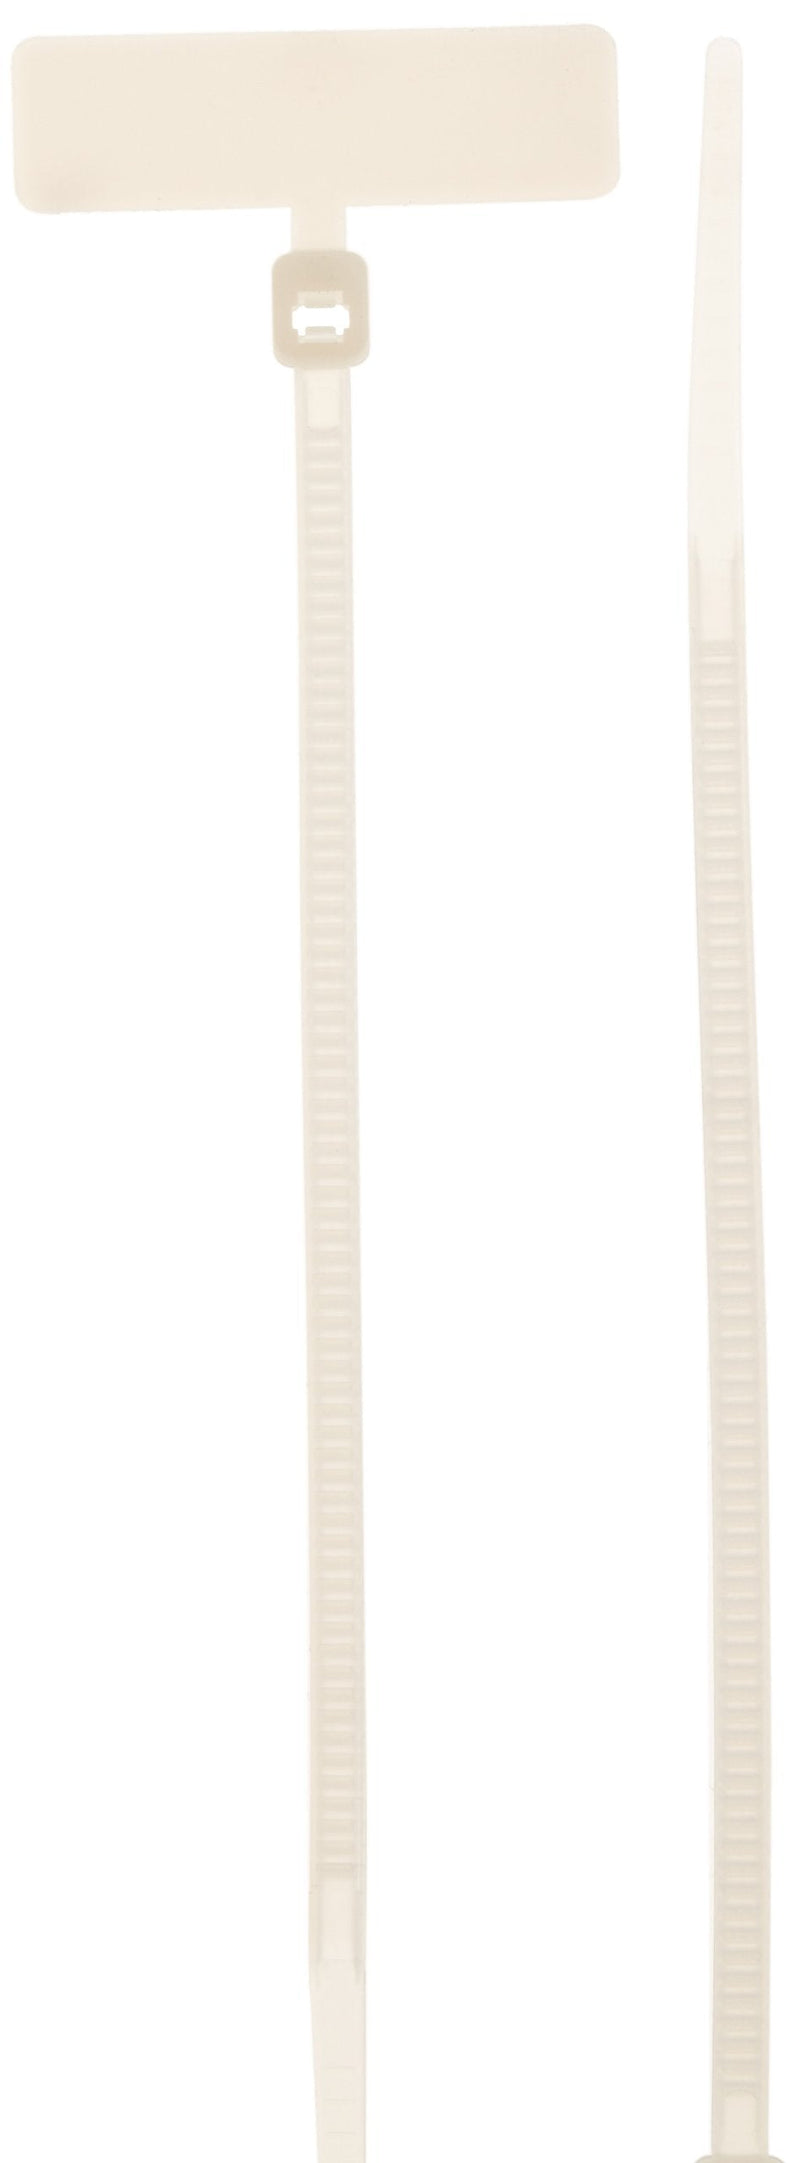  [AUSTRALIA] - Morris Products 20372 Security Nylon Cable Ties, 4.37" Length, 0.10" Width, Tensile Strength, 0.79" Max Bundle Diameter (Pack of 100)